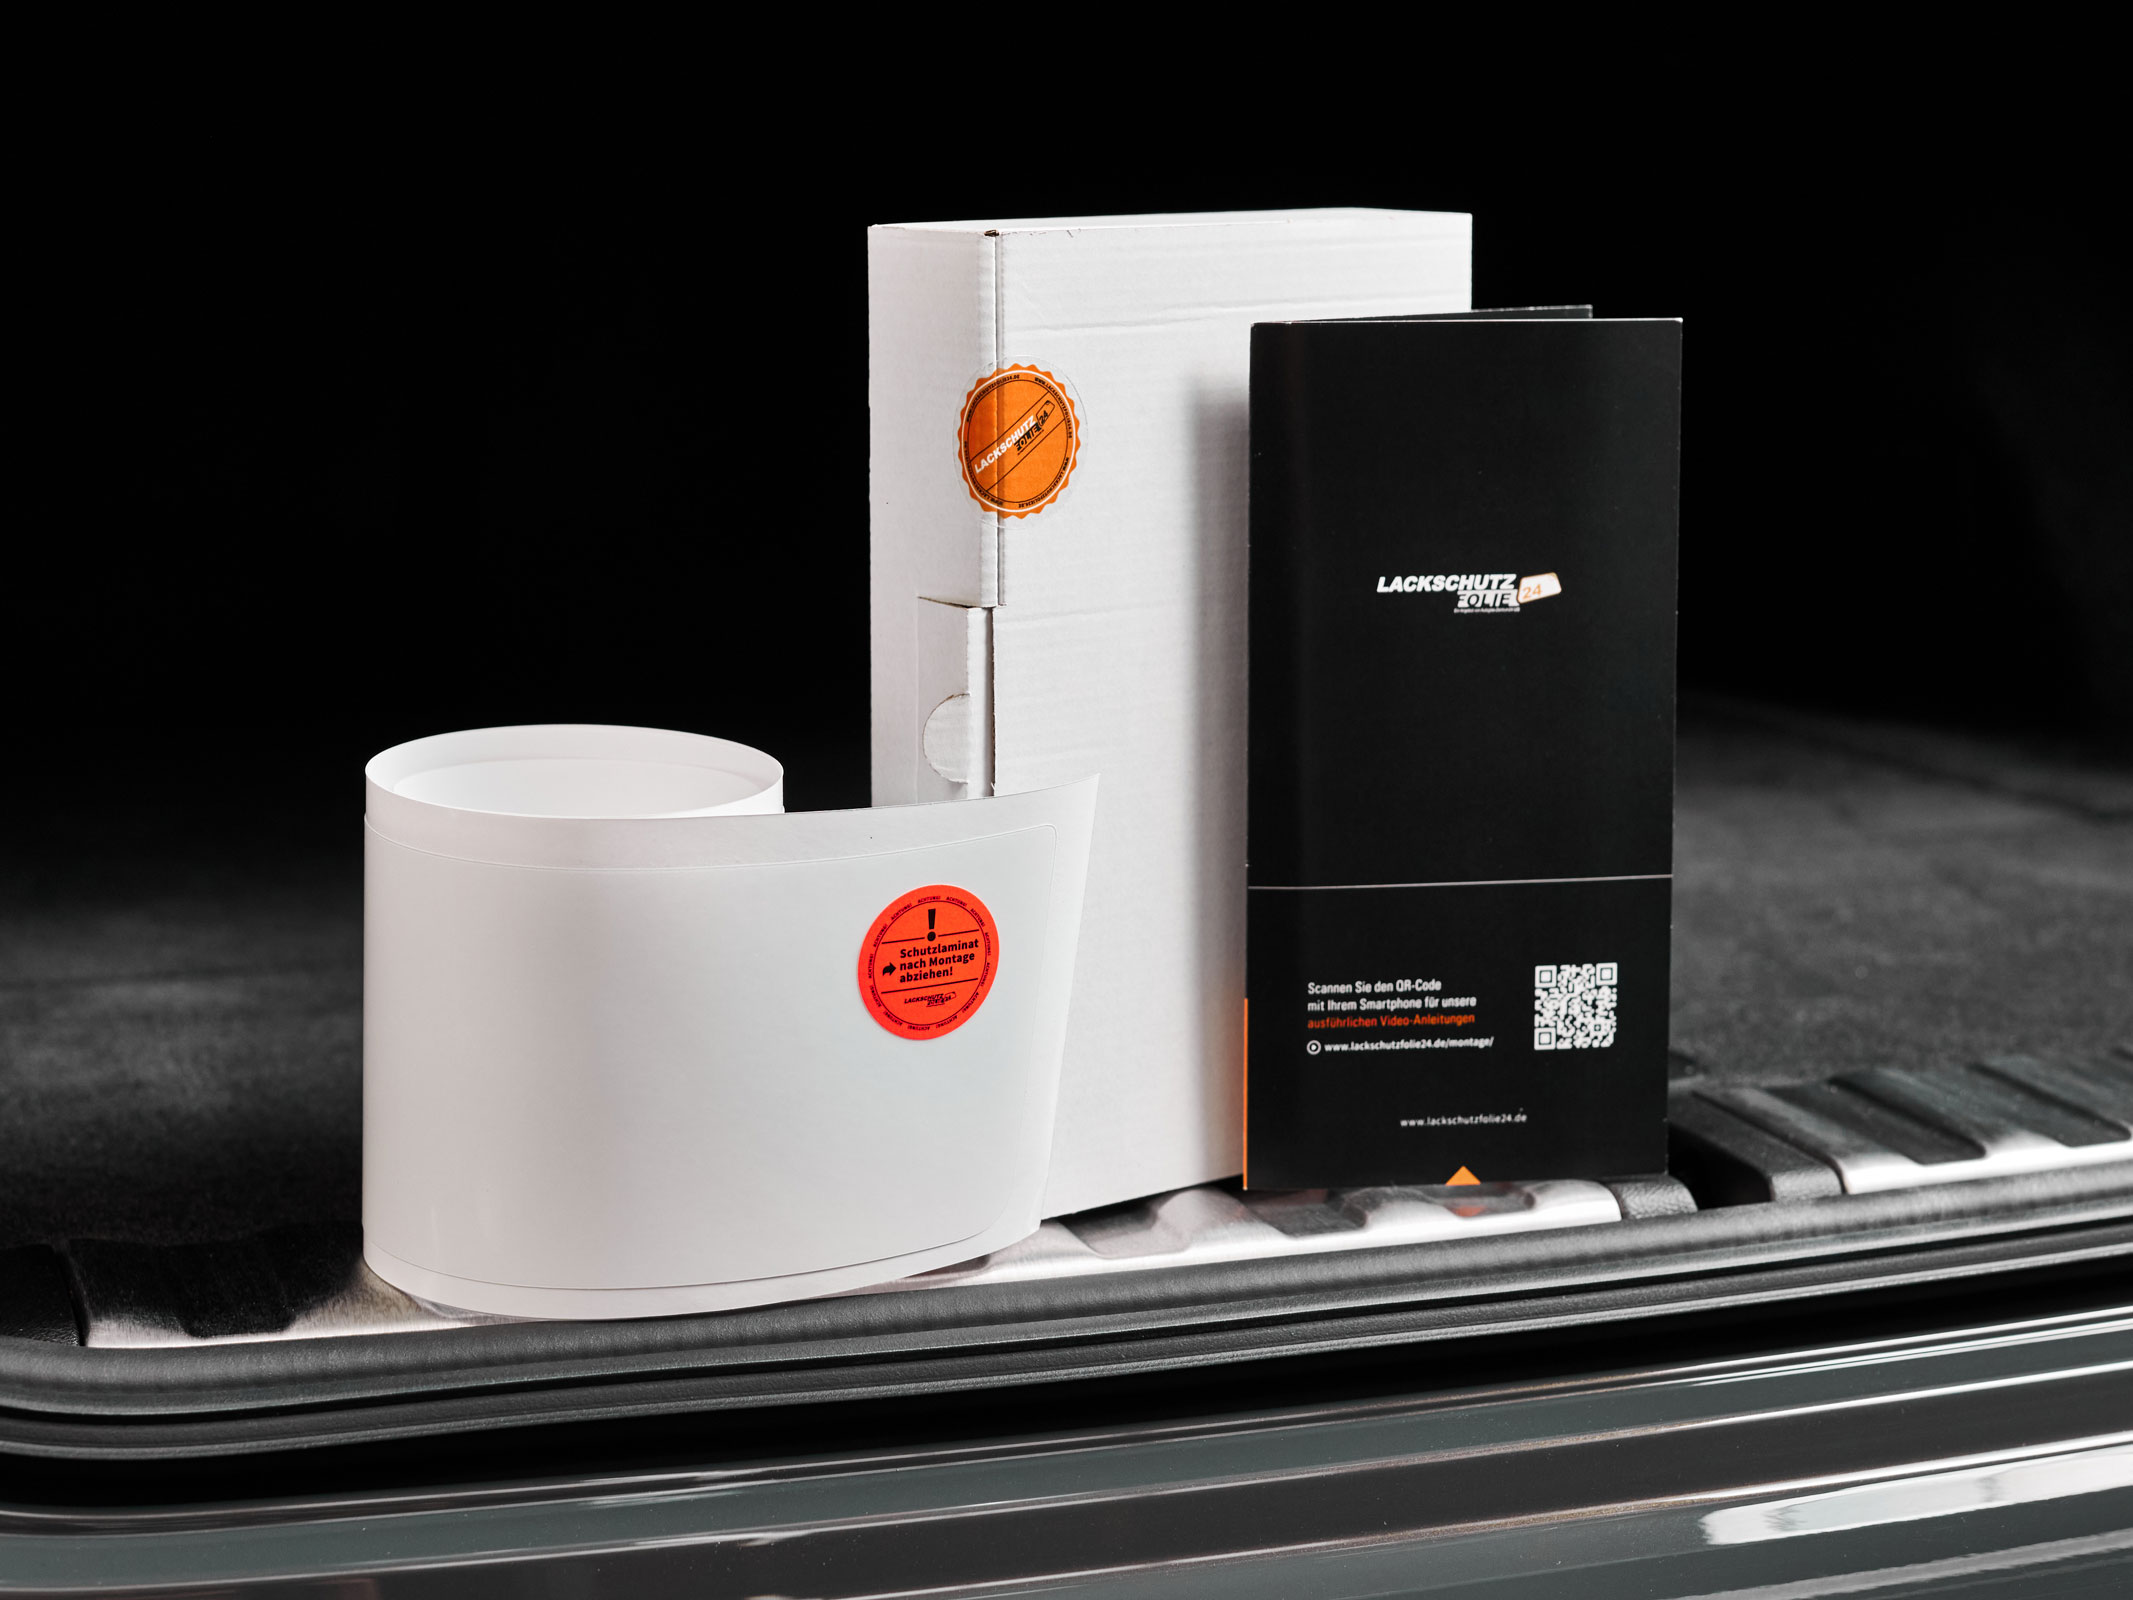 Ladekantenschutzfolie - Transparent Glatt Hochglänzend 150 µm stark für Peugeot 308 (II) BJ 2013-2017